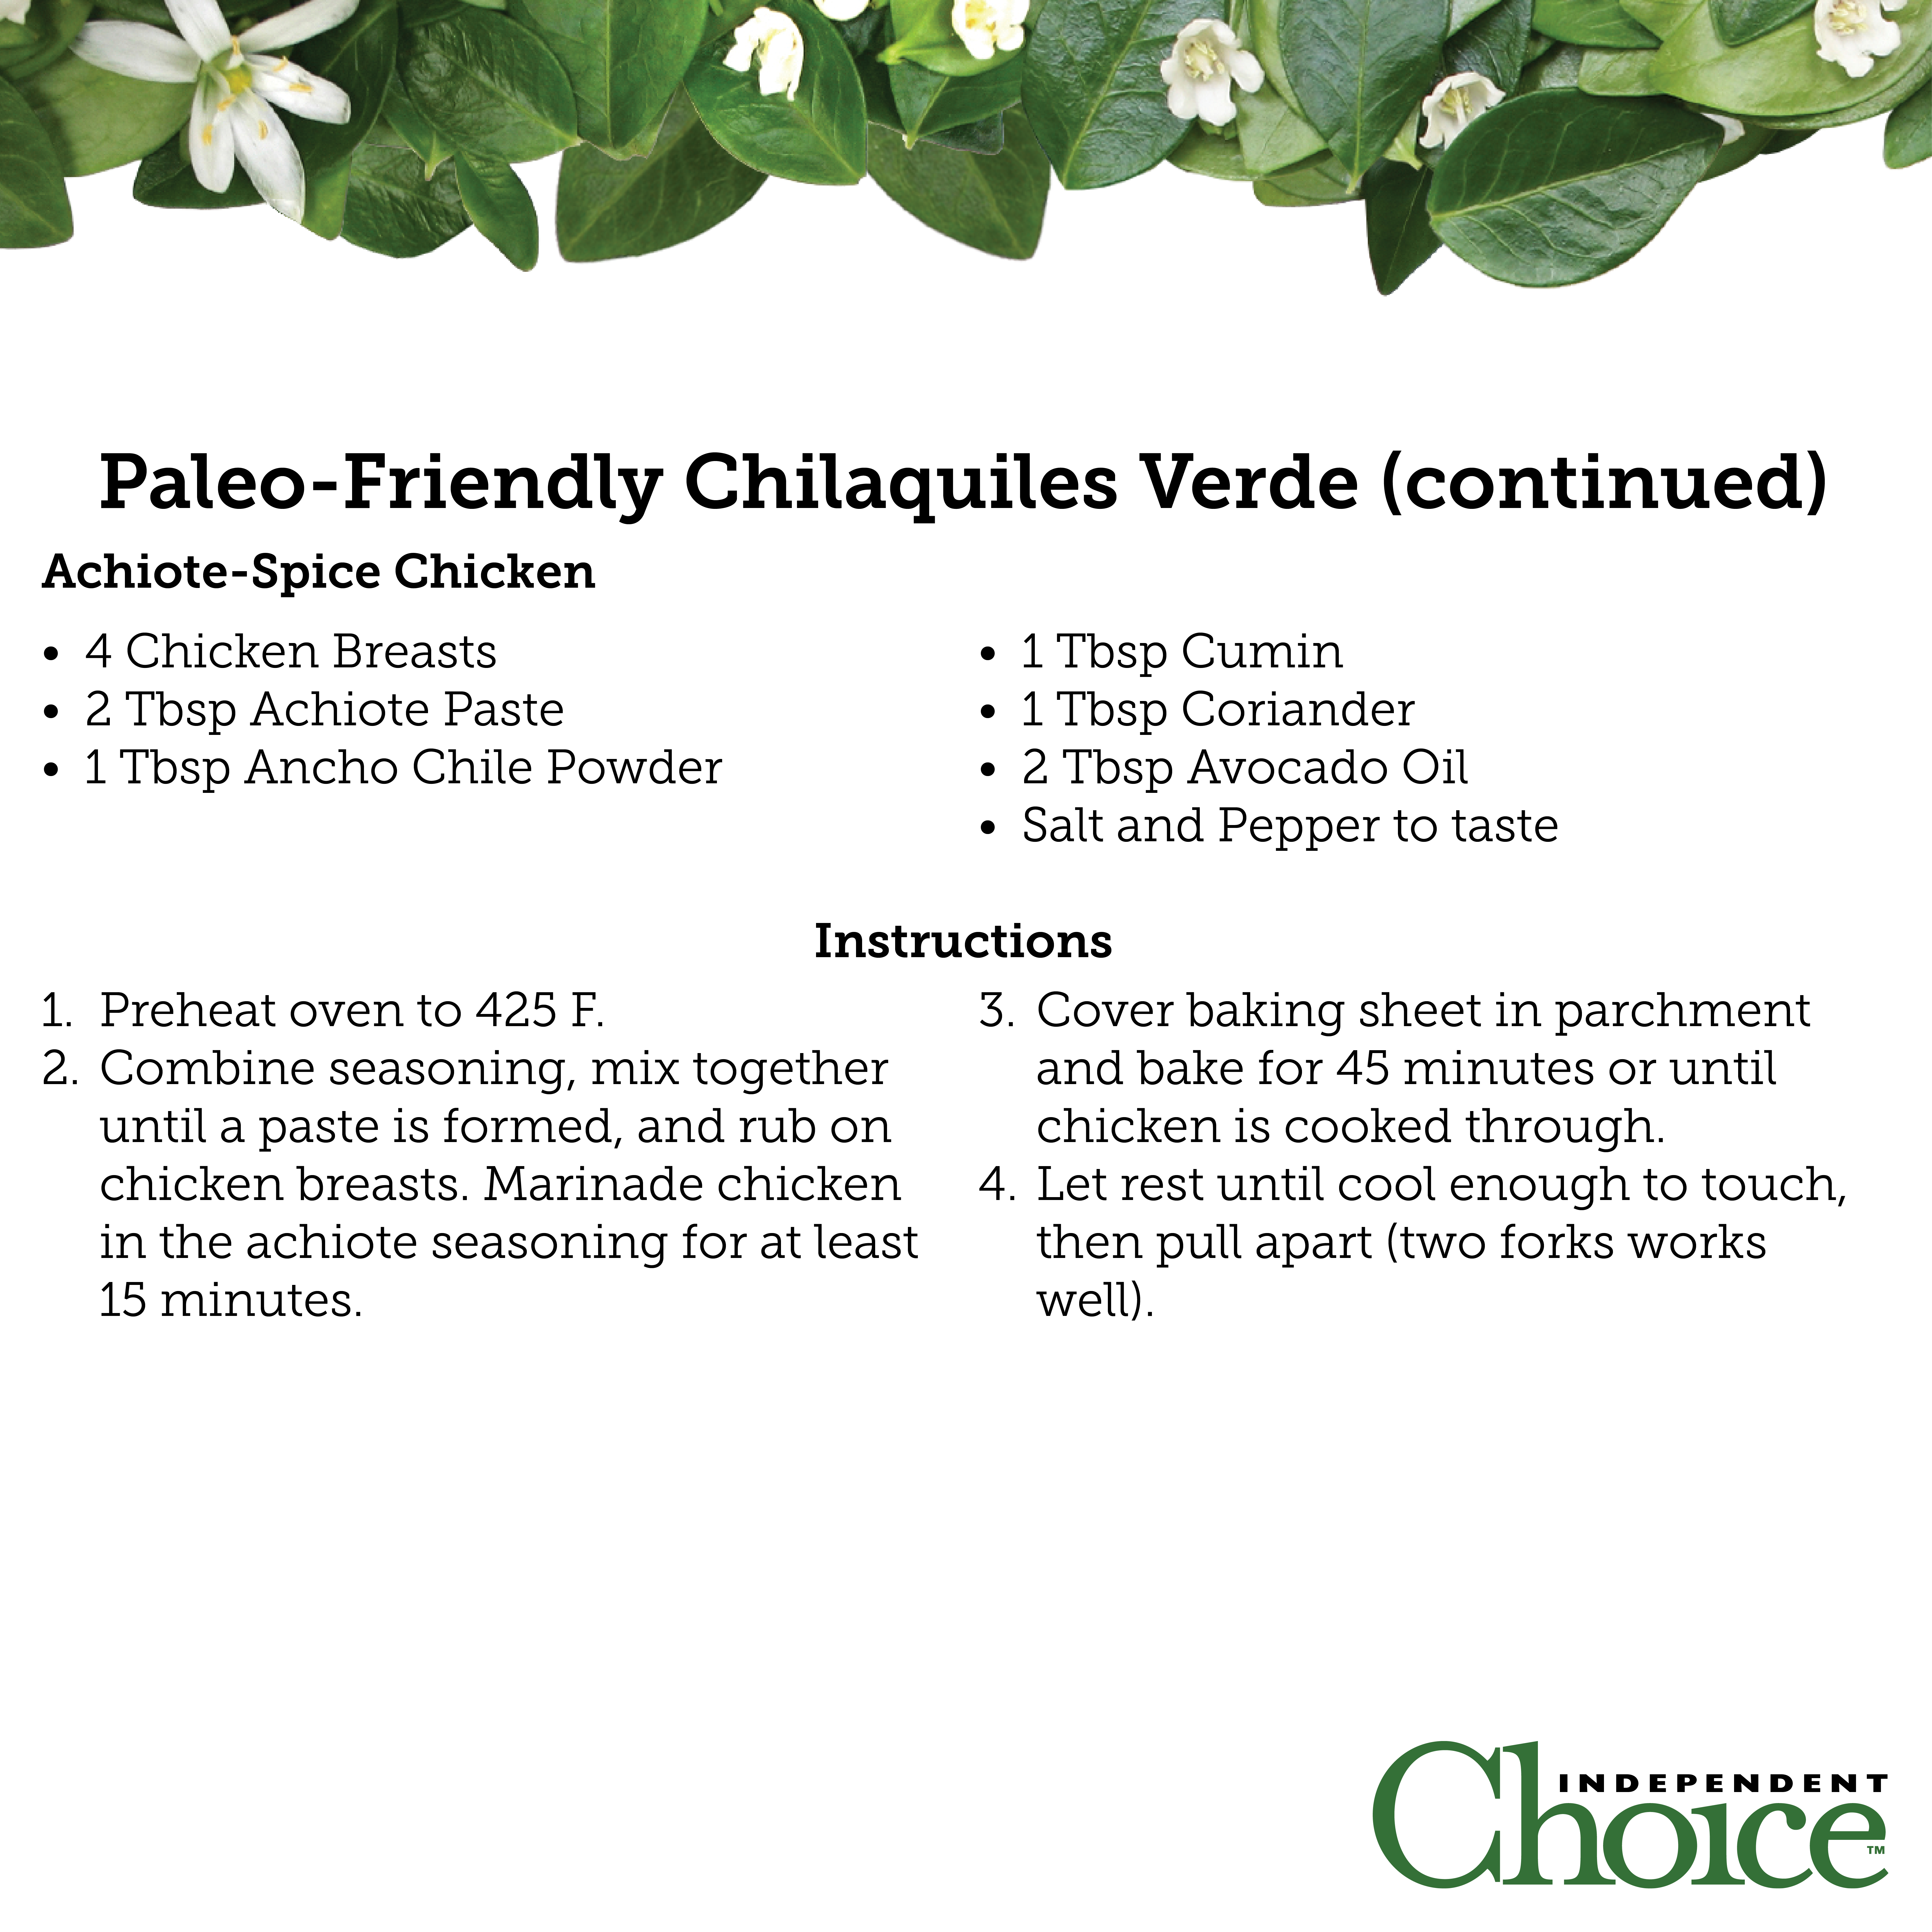 Paleo-Friendly Chilaquiles Verde